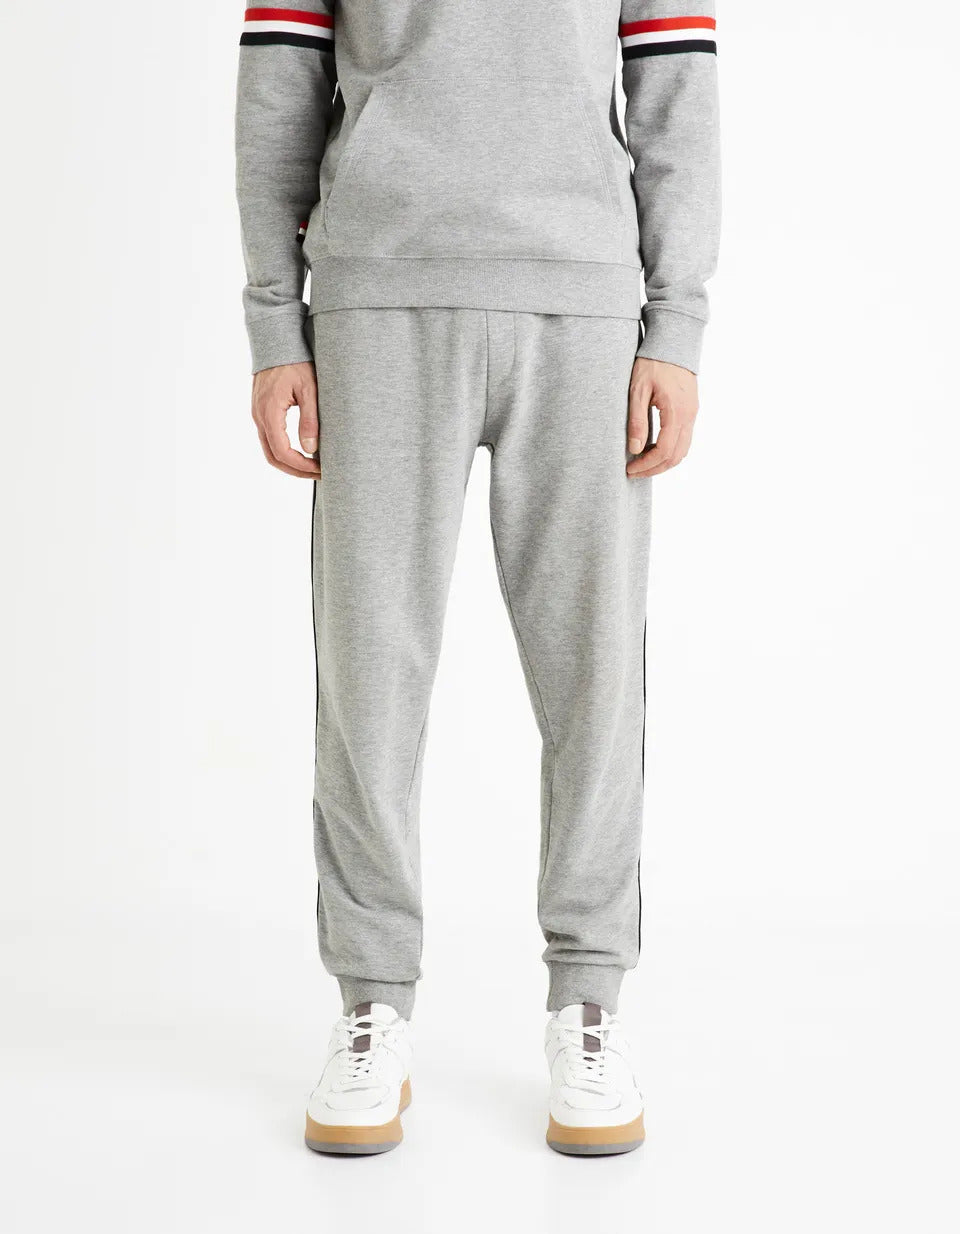 Jogging Pants 100% Cotton - Gray - 01